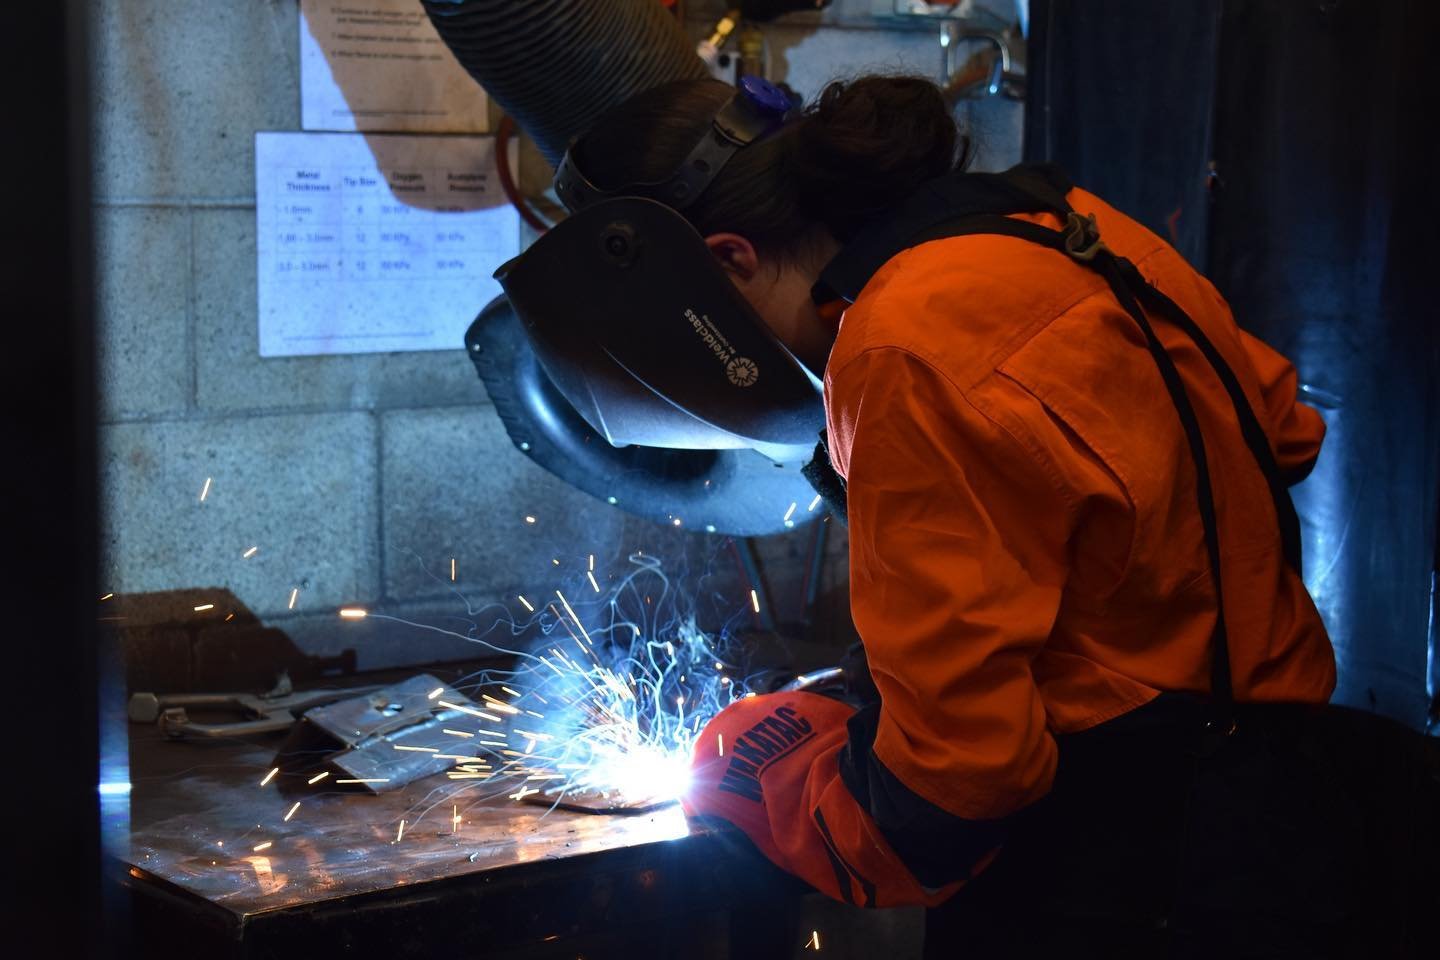 Our Year 10s working on their welding skills in the engineering workshop 🧑&zwj;🏭
.
.
.
.
.
.
#welding #engineering #workshop #wacoa_denmark #denmarkwa #tradesandtraining #trades #metalwork